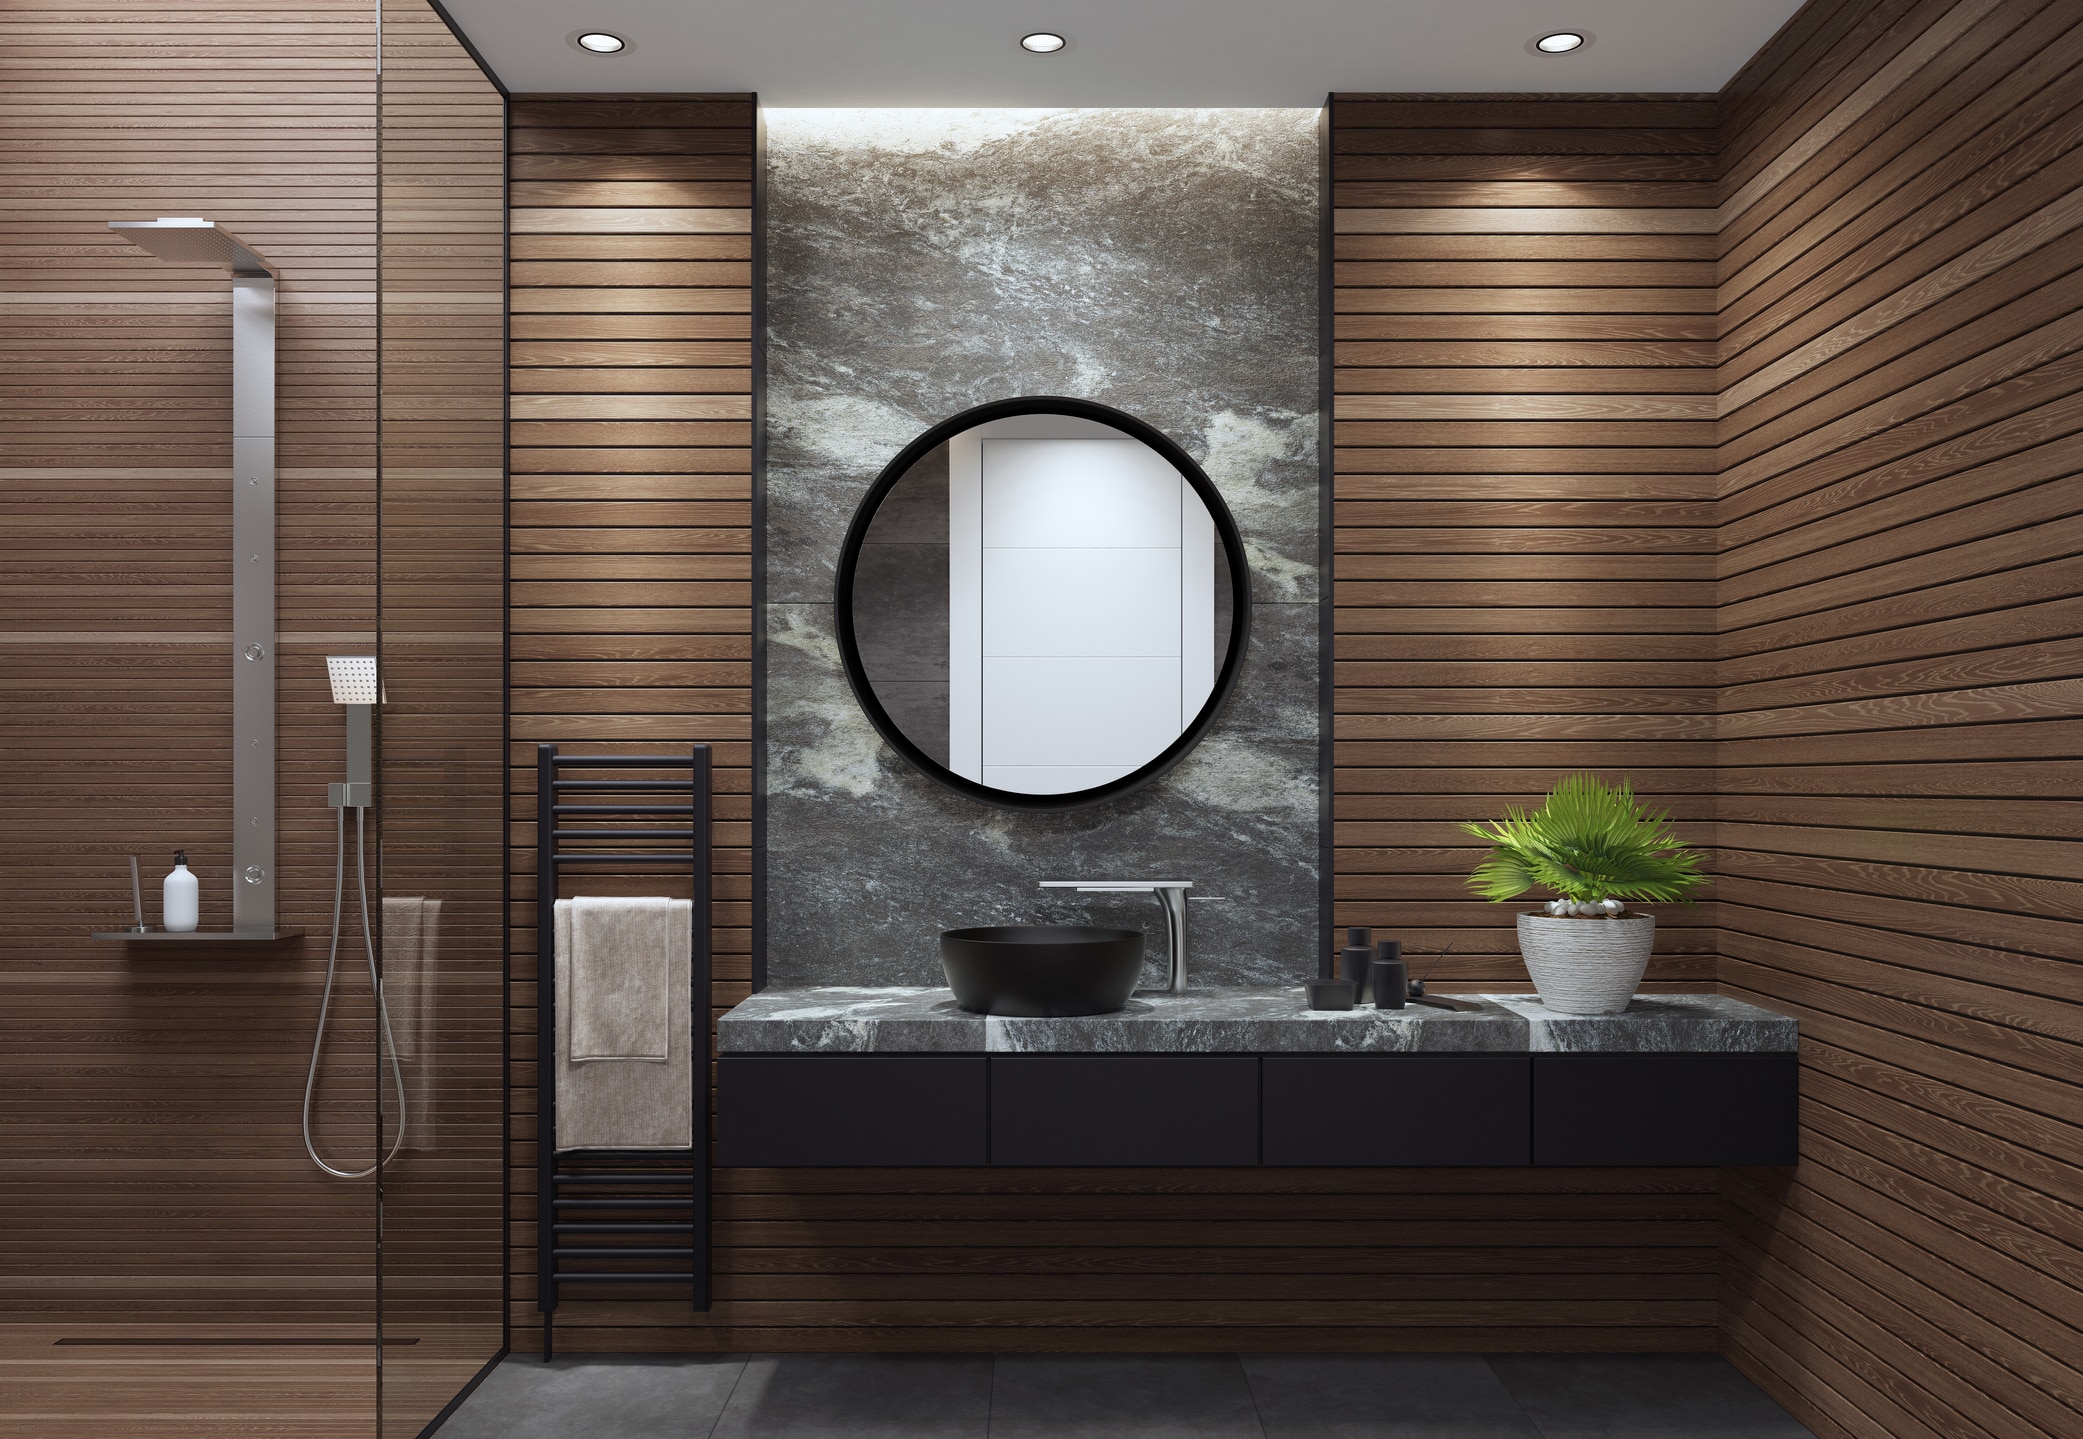 The Top Ten Bathroom Renovation Ideas for 2022